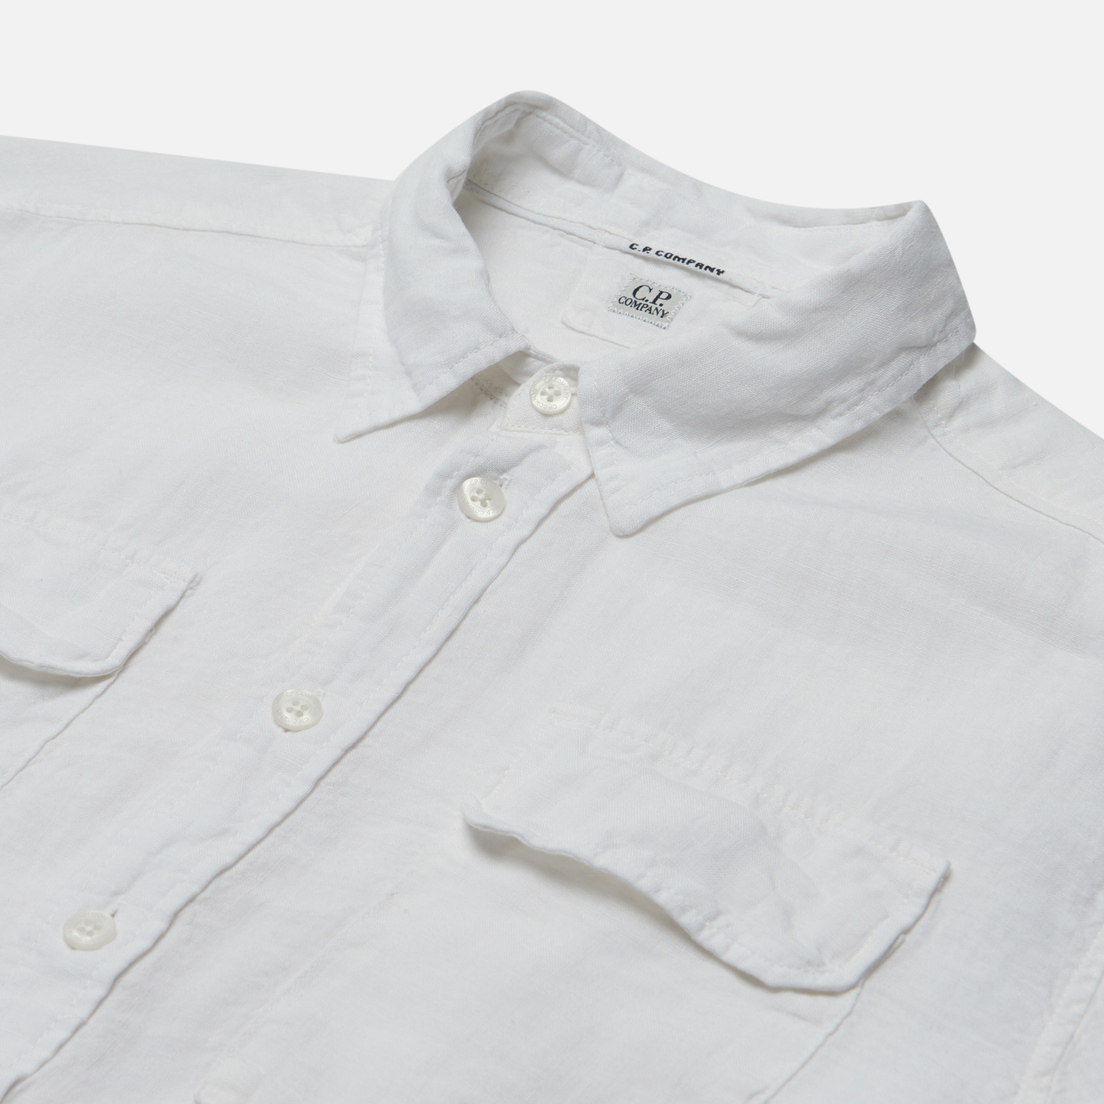 C.P. Company Мужская рубашка Linen Pocket